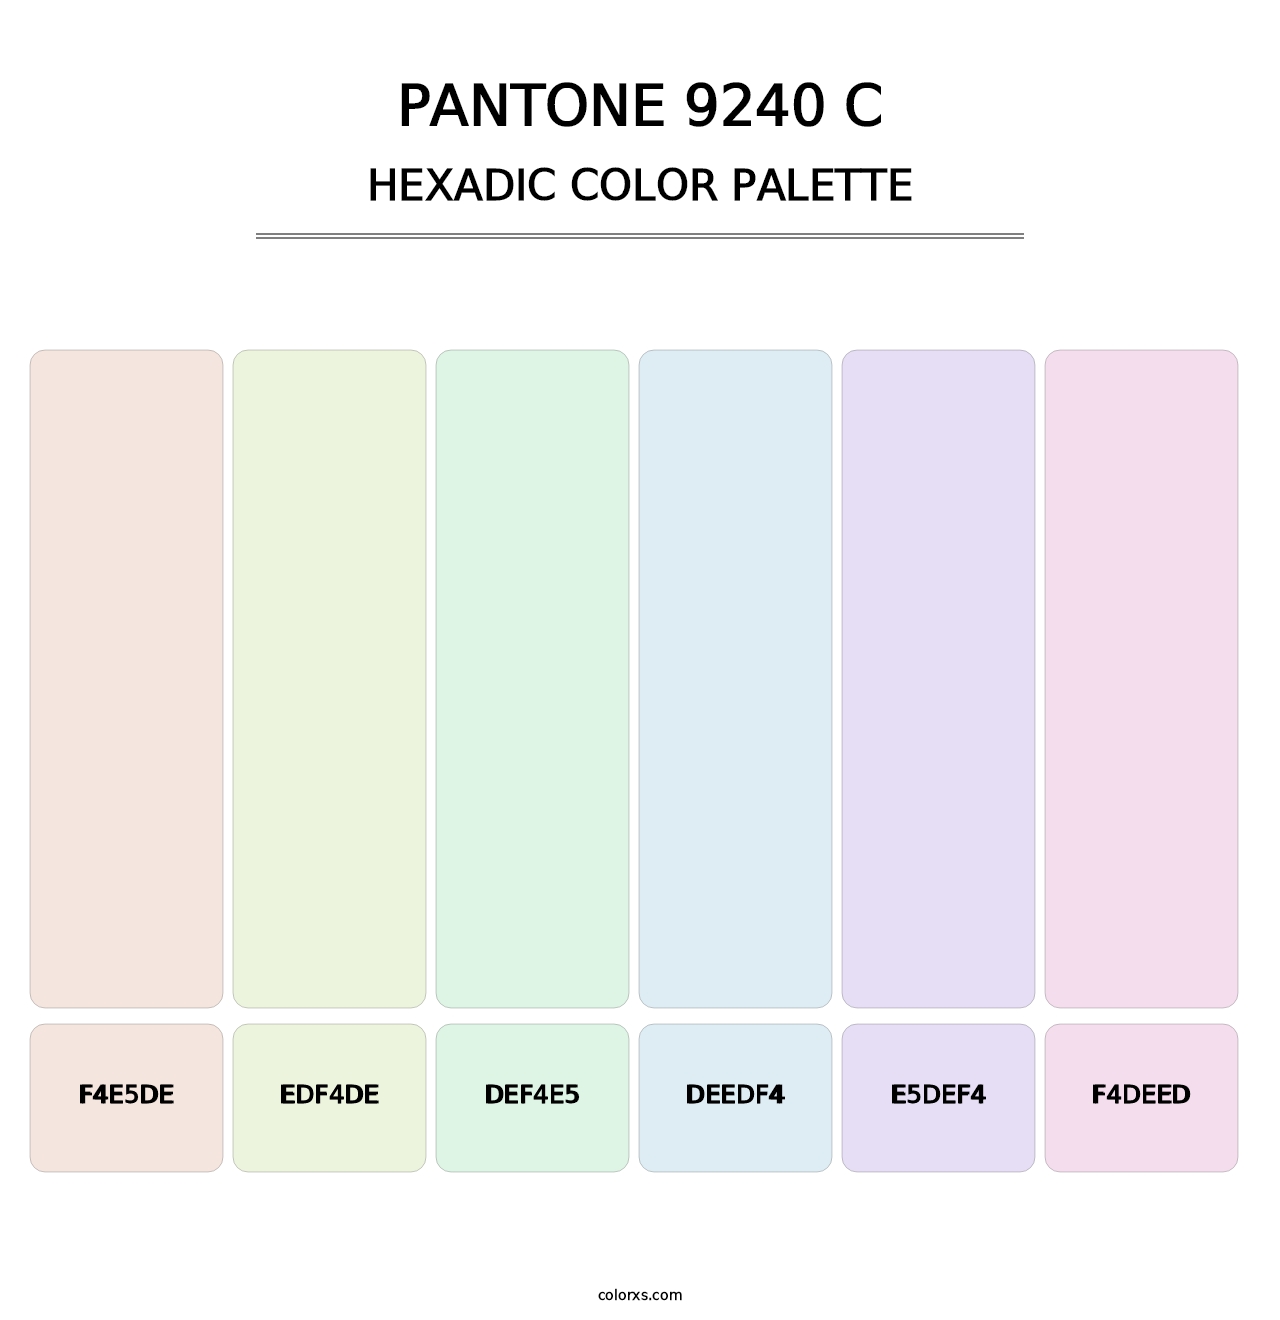 PANTONE 9240 C - Hexadic Color Palette